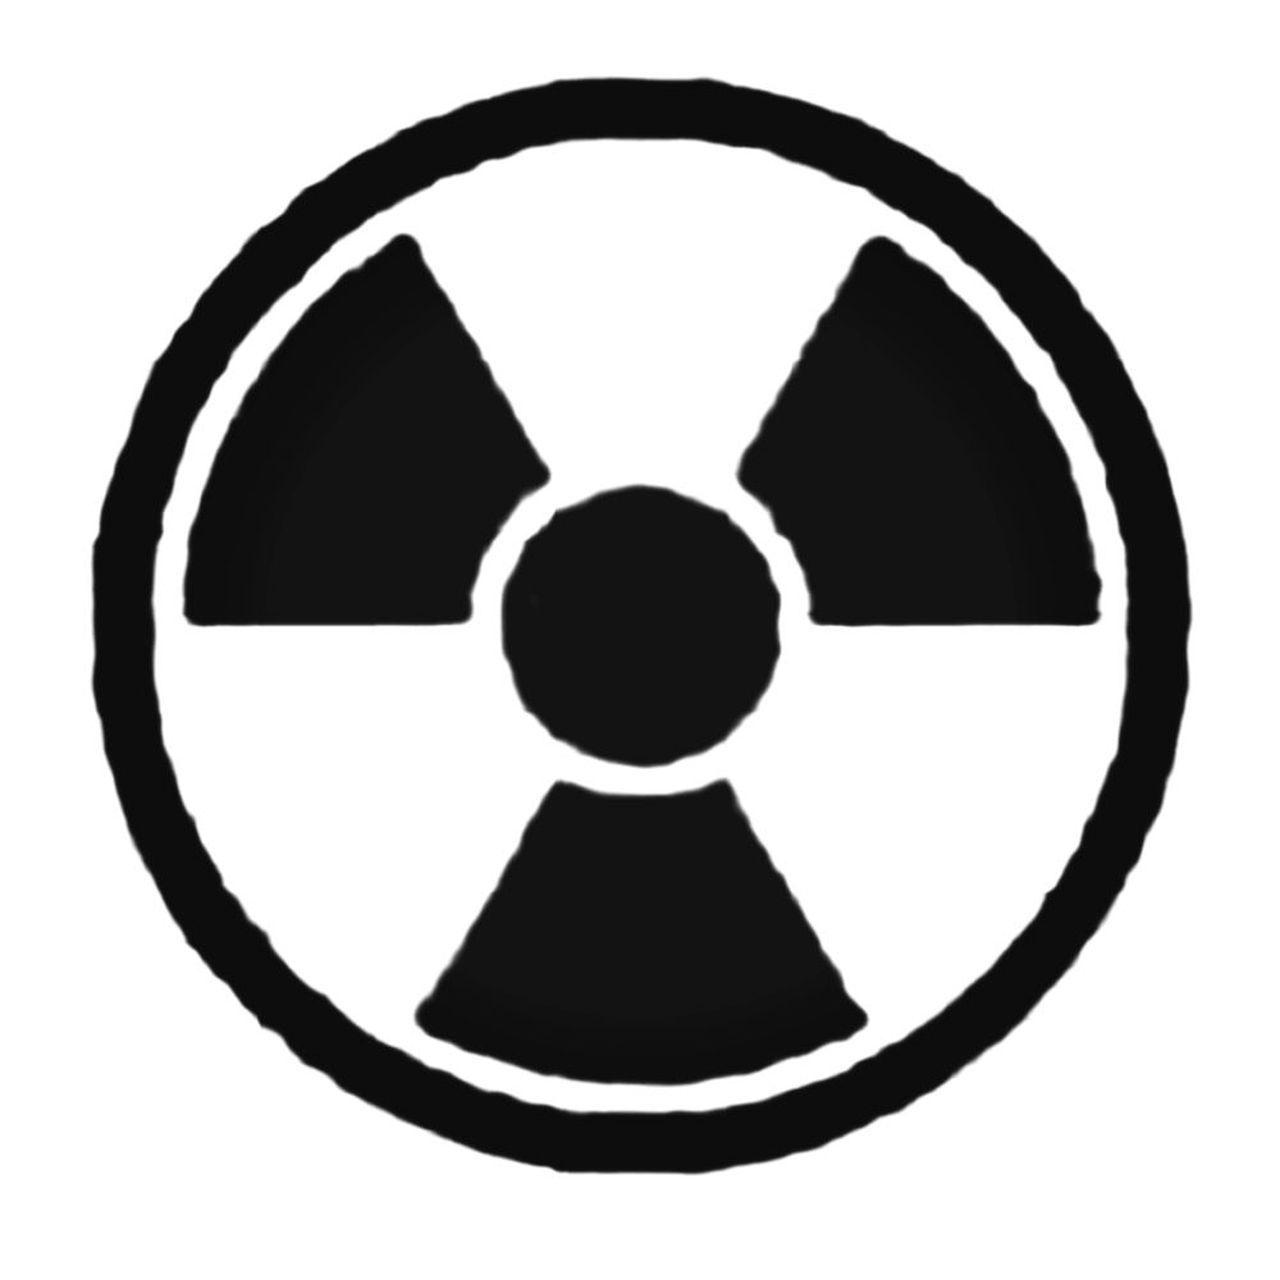 Radioactive Logo - Hulk Radioactive Symbol Decal Sticker